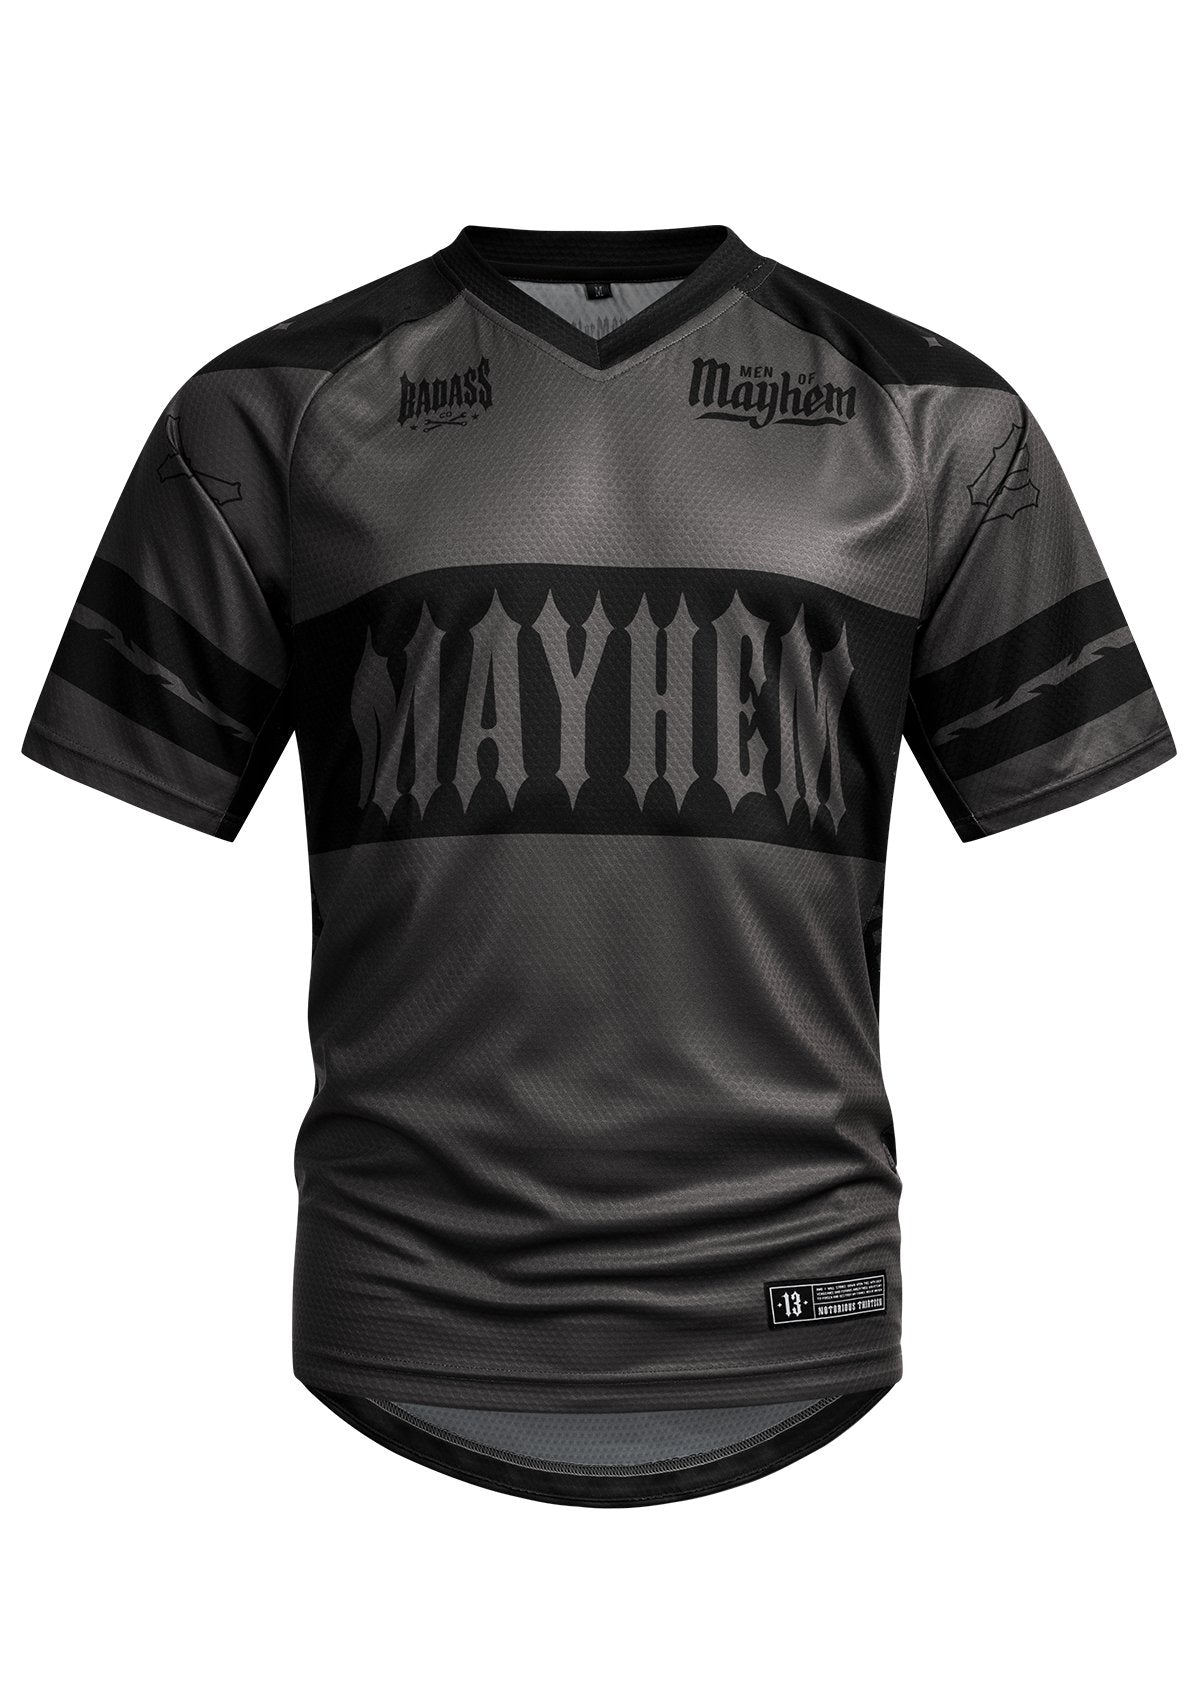 Short Sleeves Jersey Mayhem Fade G/S - MEN OF MAYHEM - ALAIKO-EXCHANGES-MM-M-1140-SJ-JM-FDE-GS - Grau - Jerseys